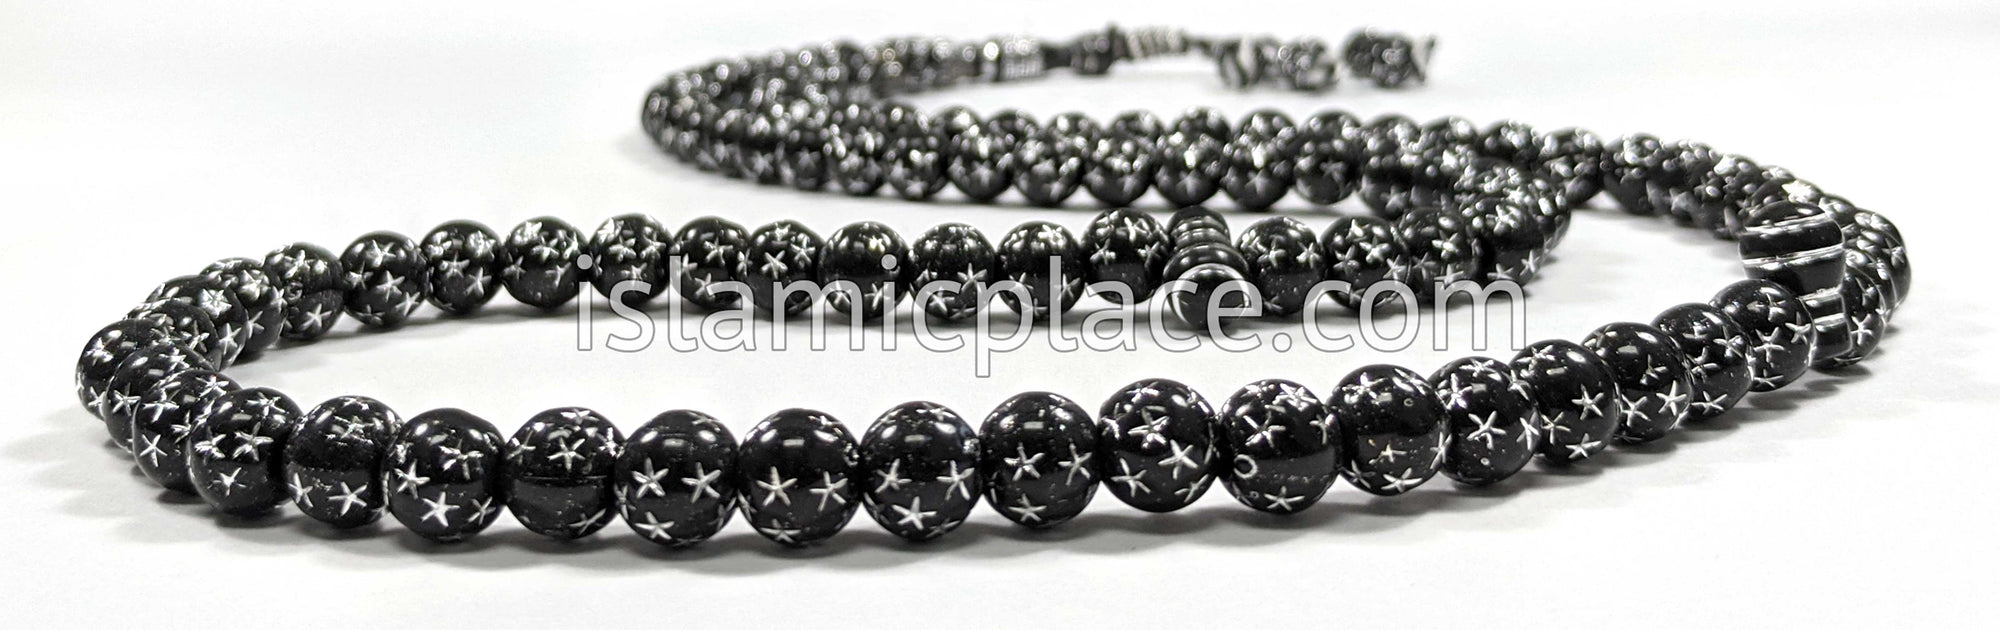 Black - Stars Design Tasbih Prayer Beads